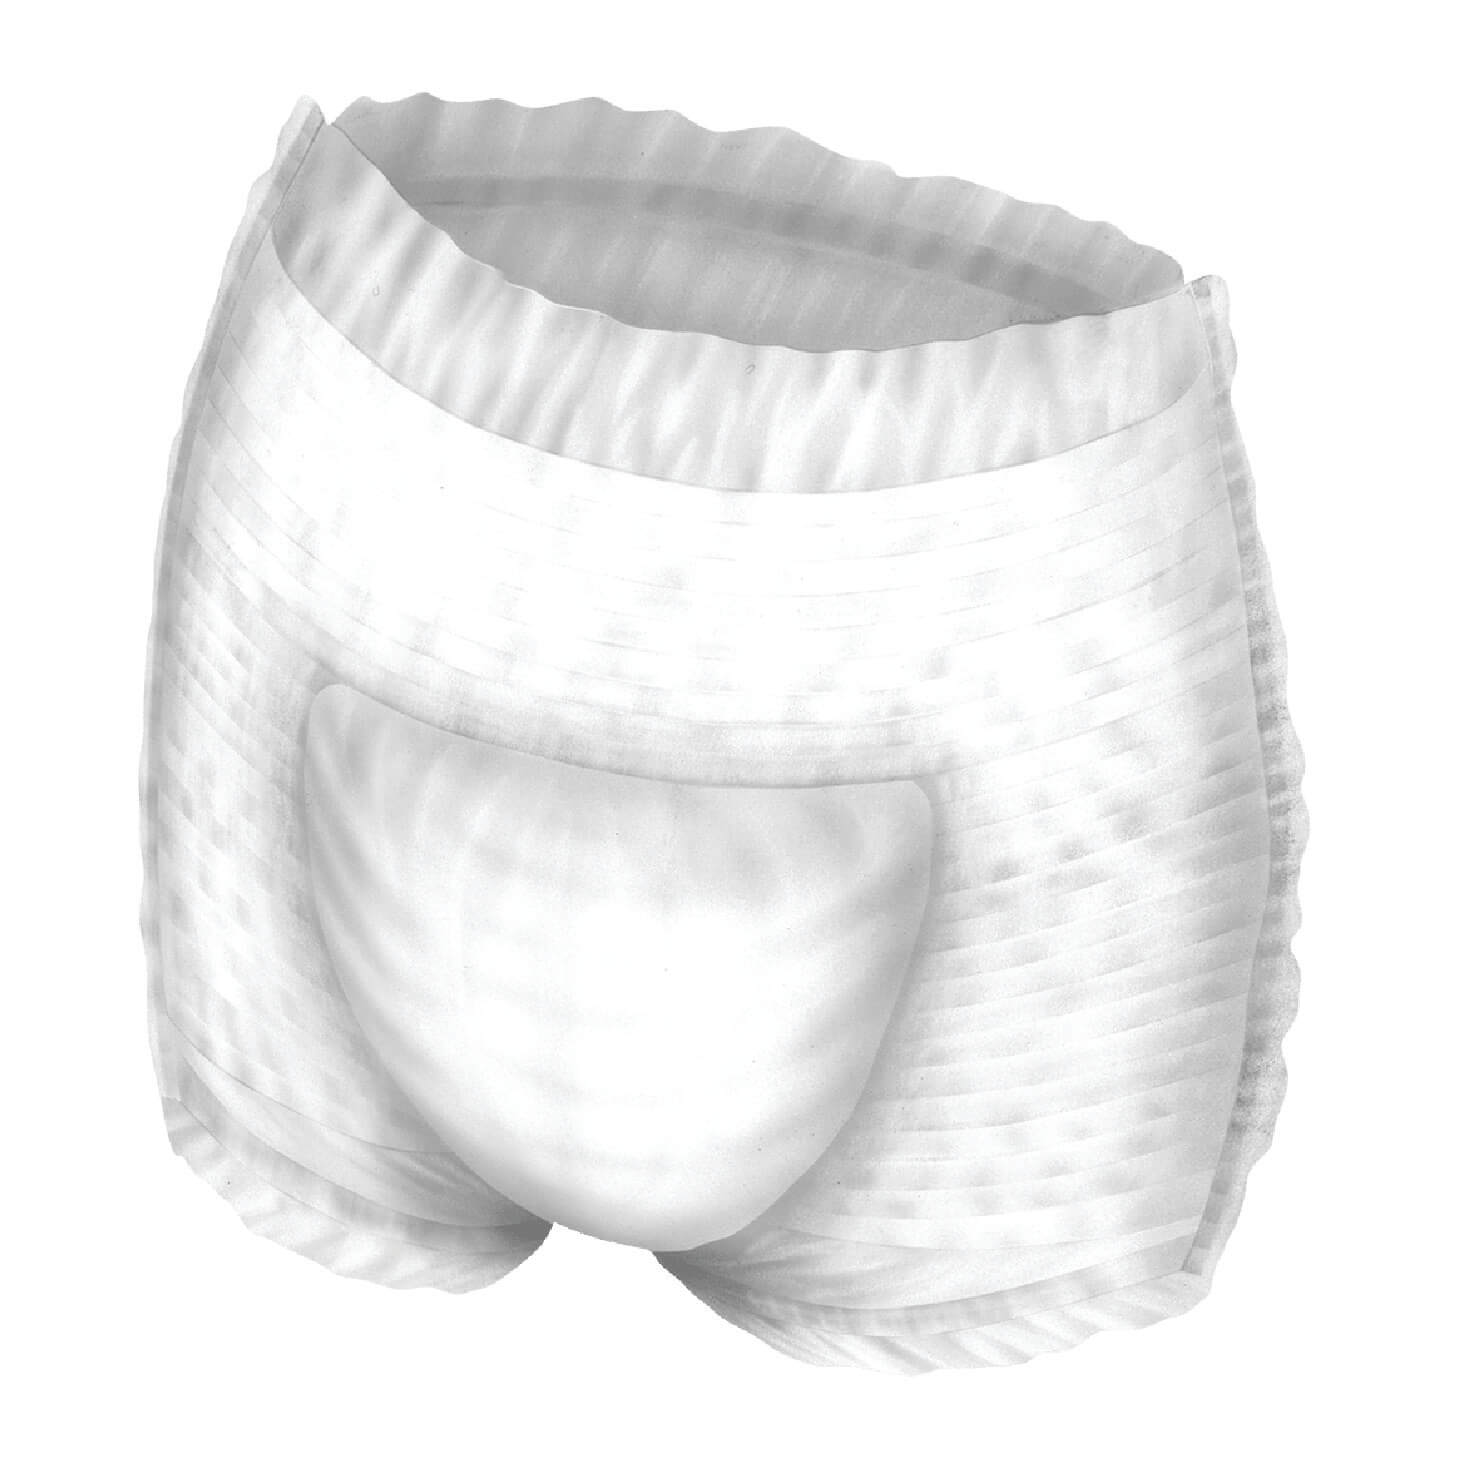 Abena Premium Pants XL3 Disposable Underwear, Moderate - Simply Medical